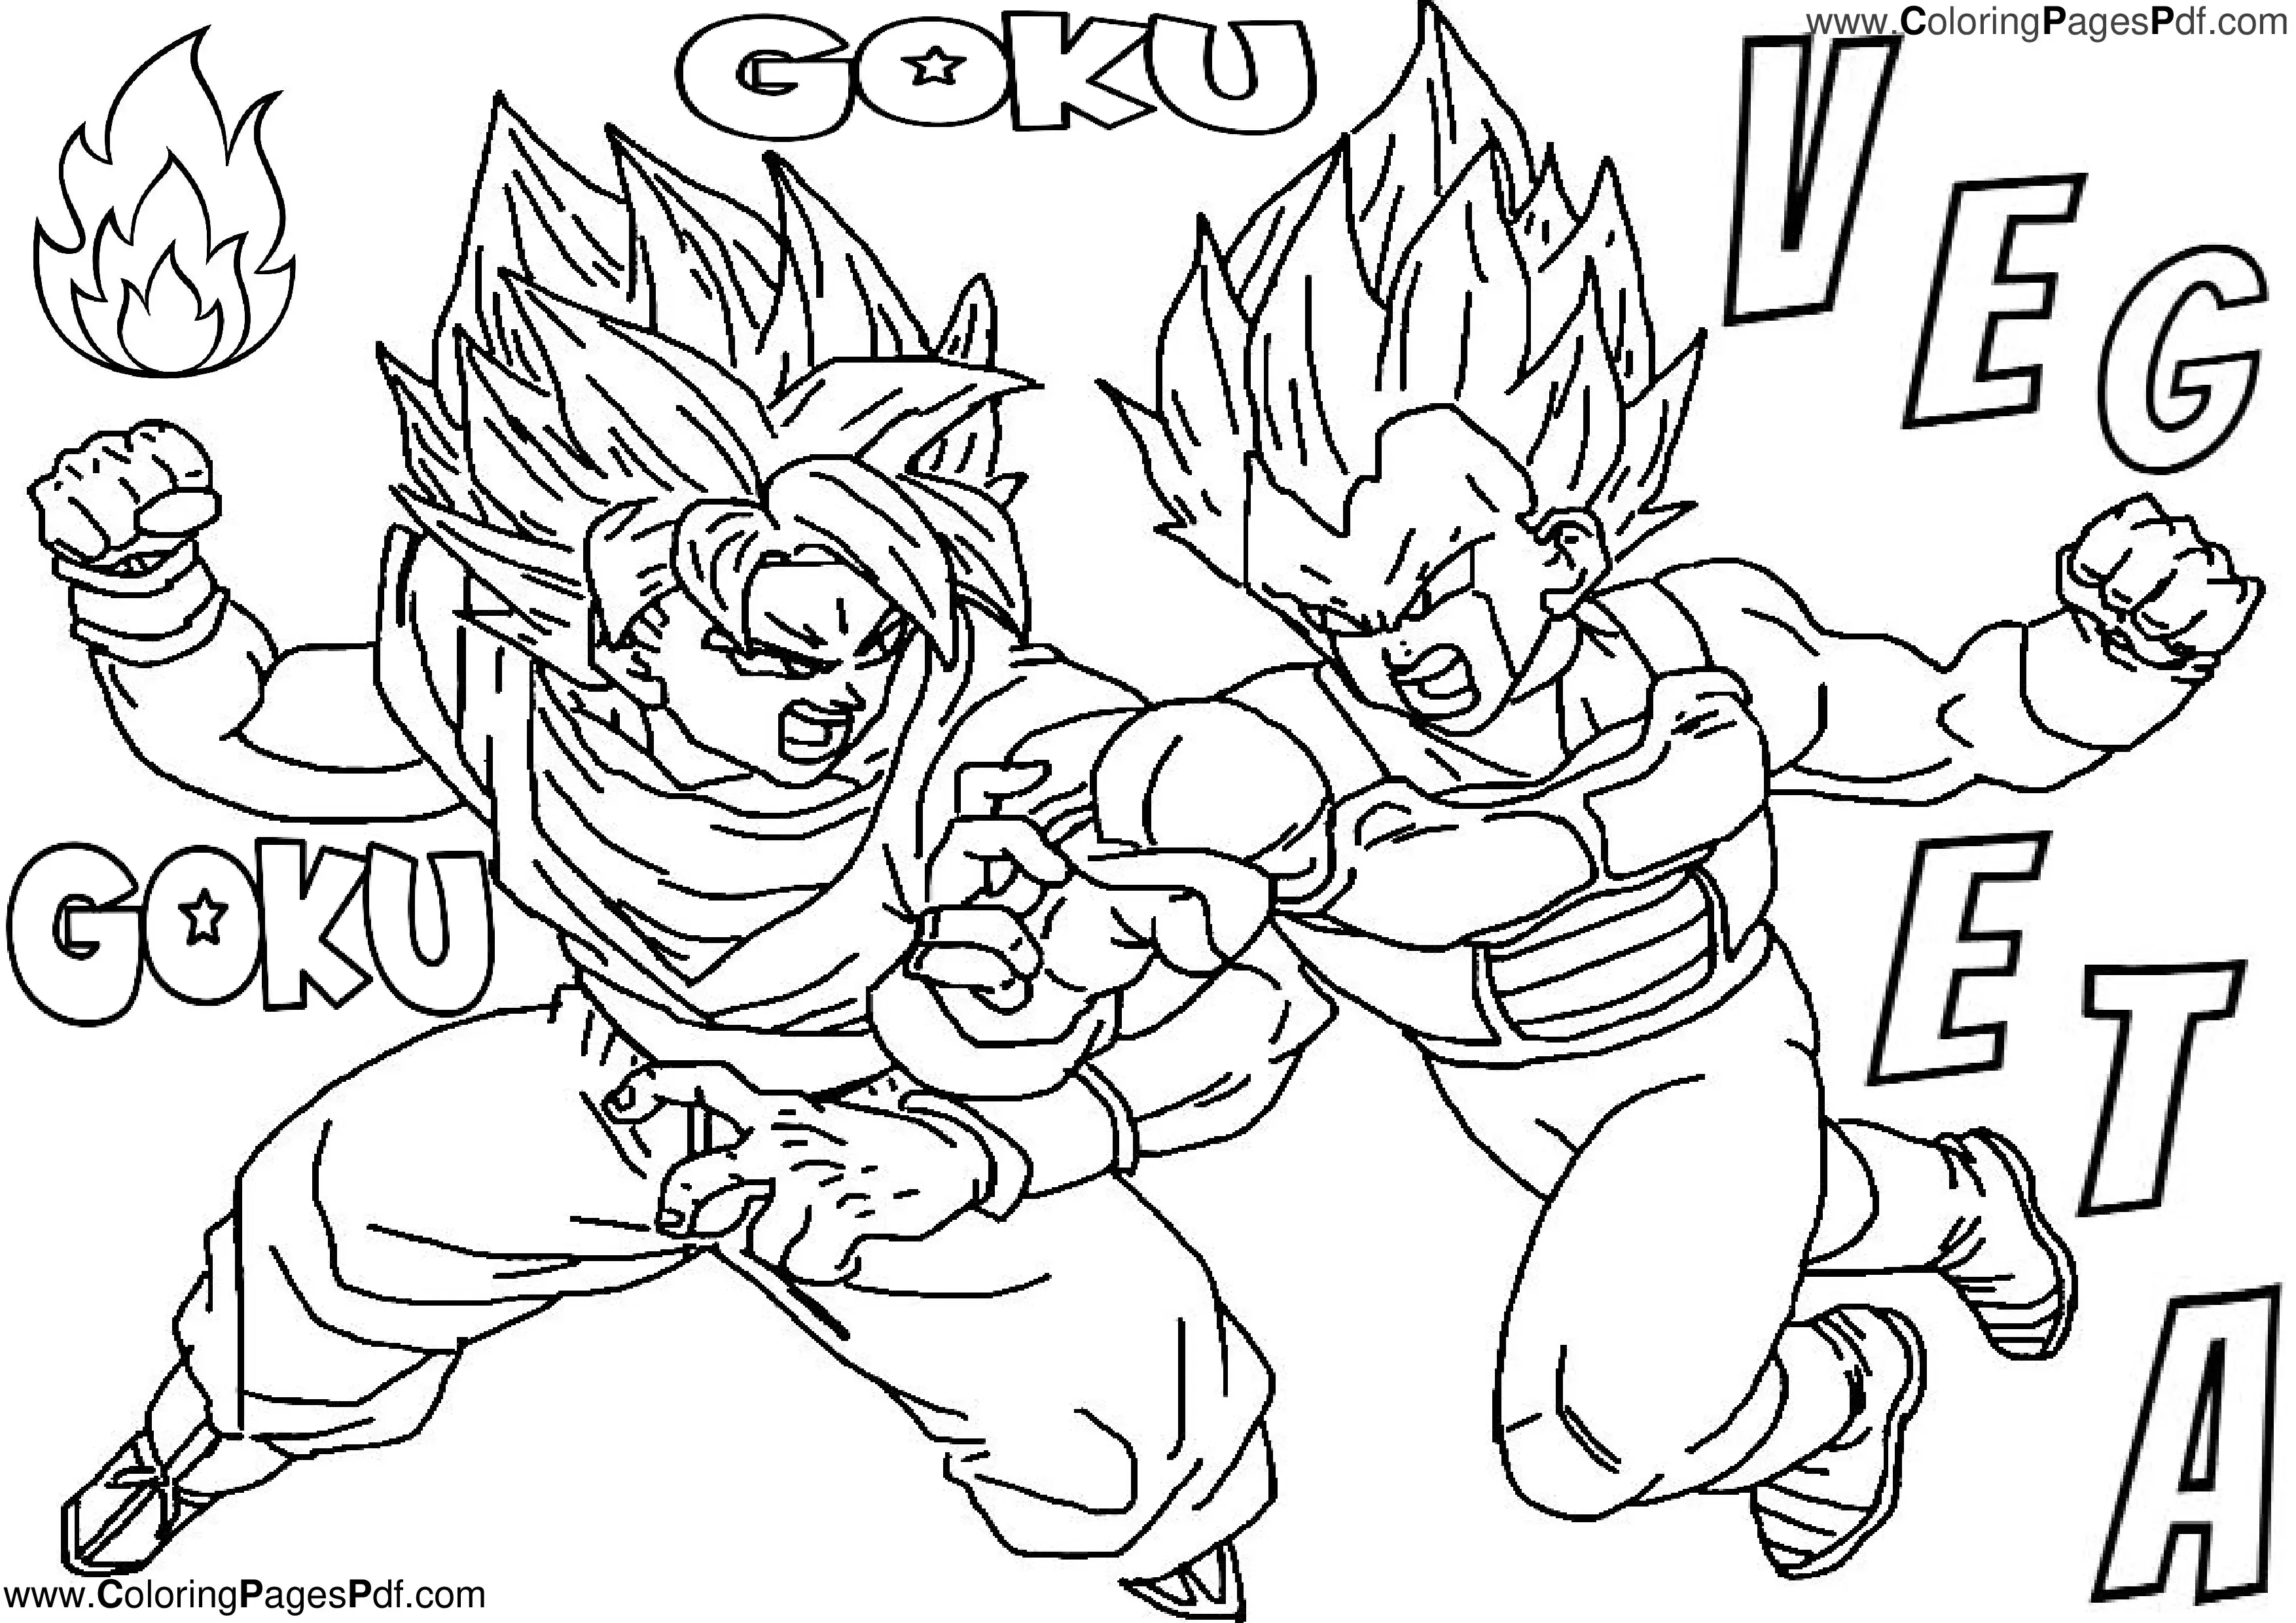 Goku & Vegeta coloring pages